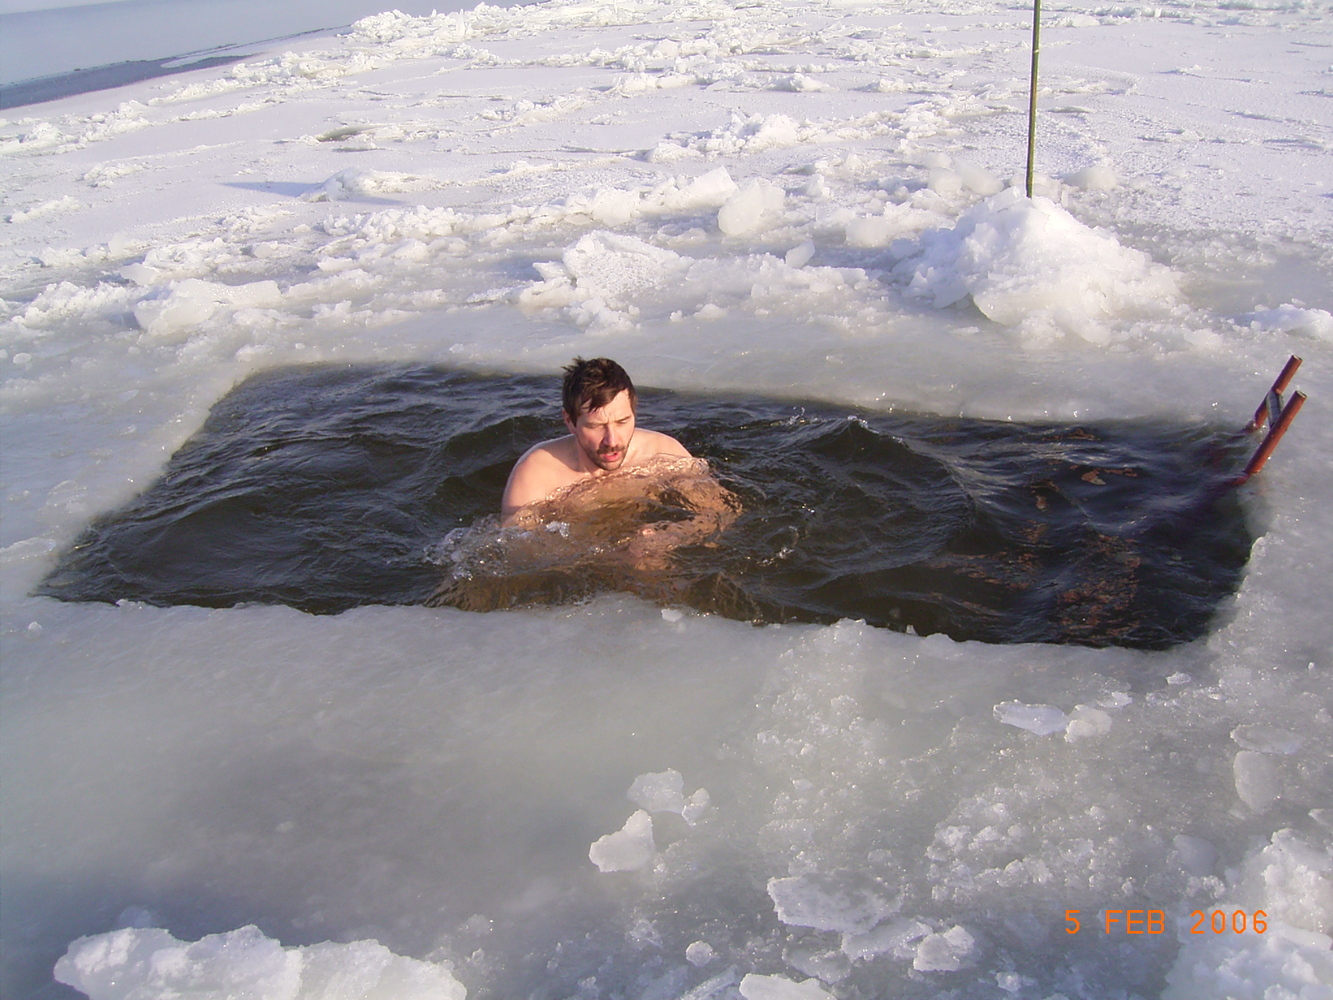 Winter swimming championship in Latvia